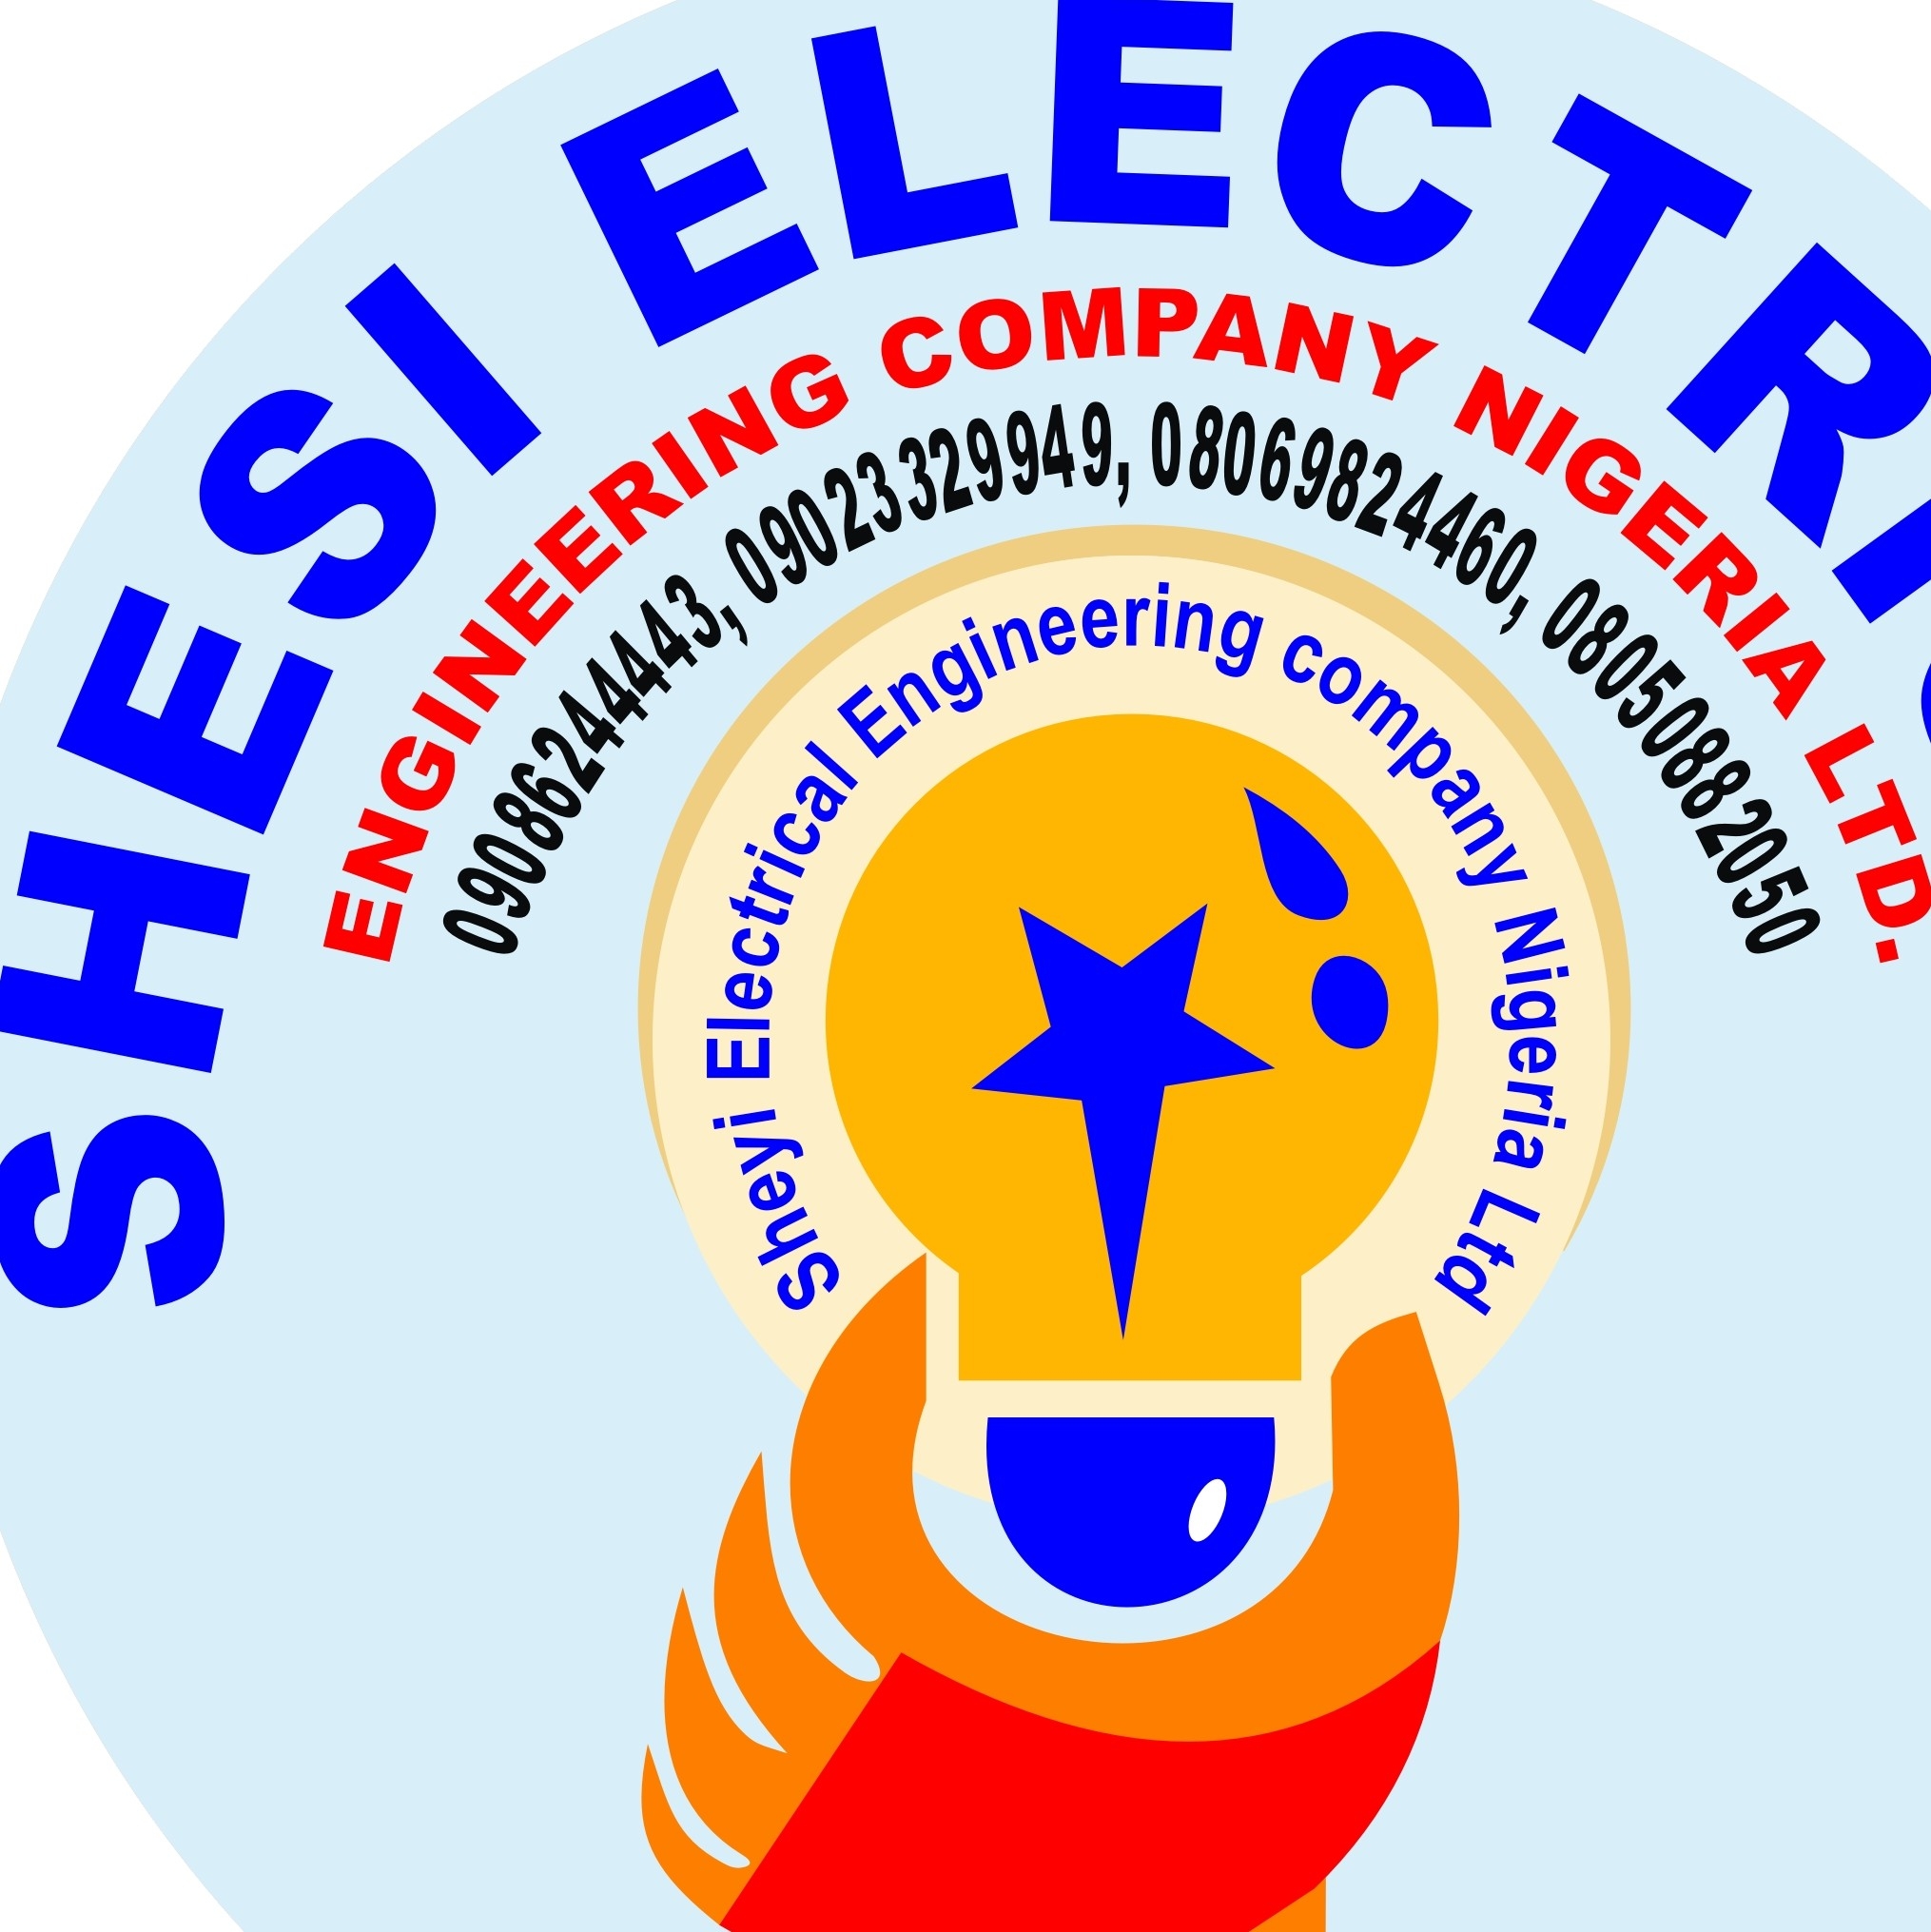 shesi electrical engineering company Nigeria Ltd logo